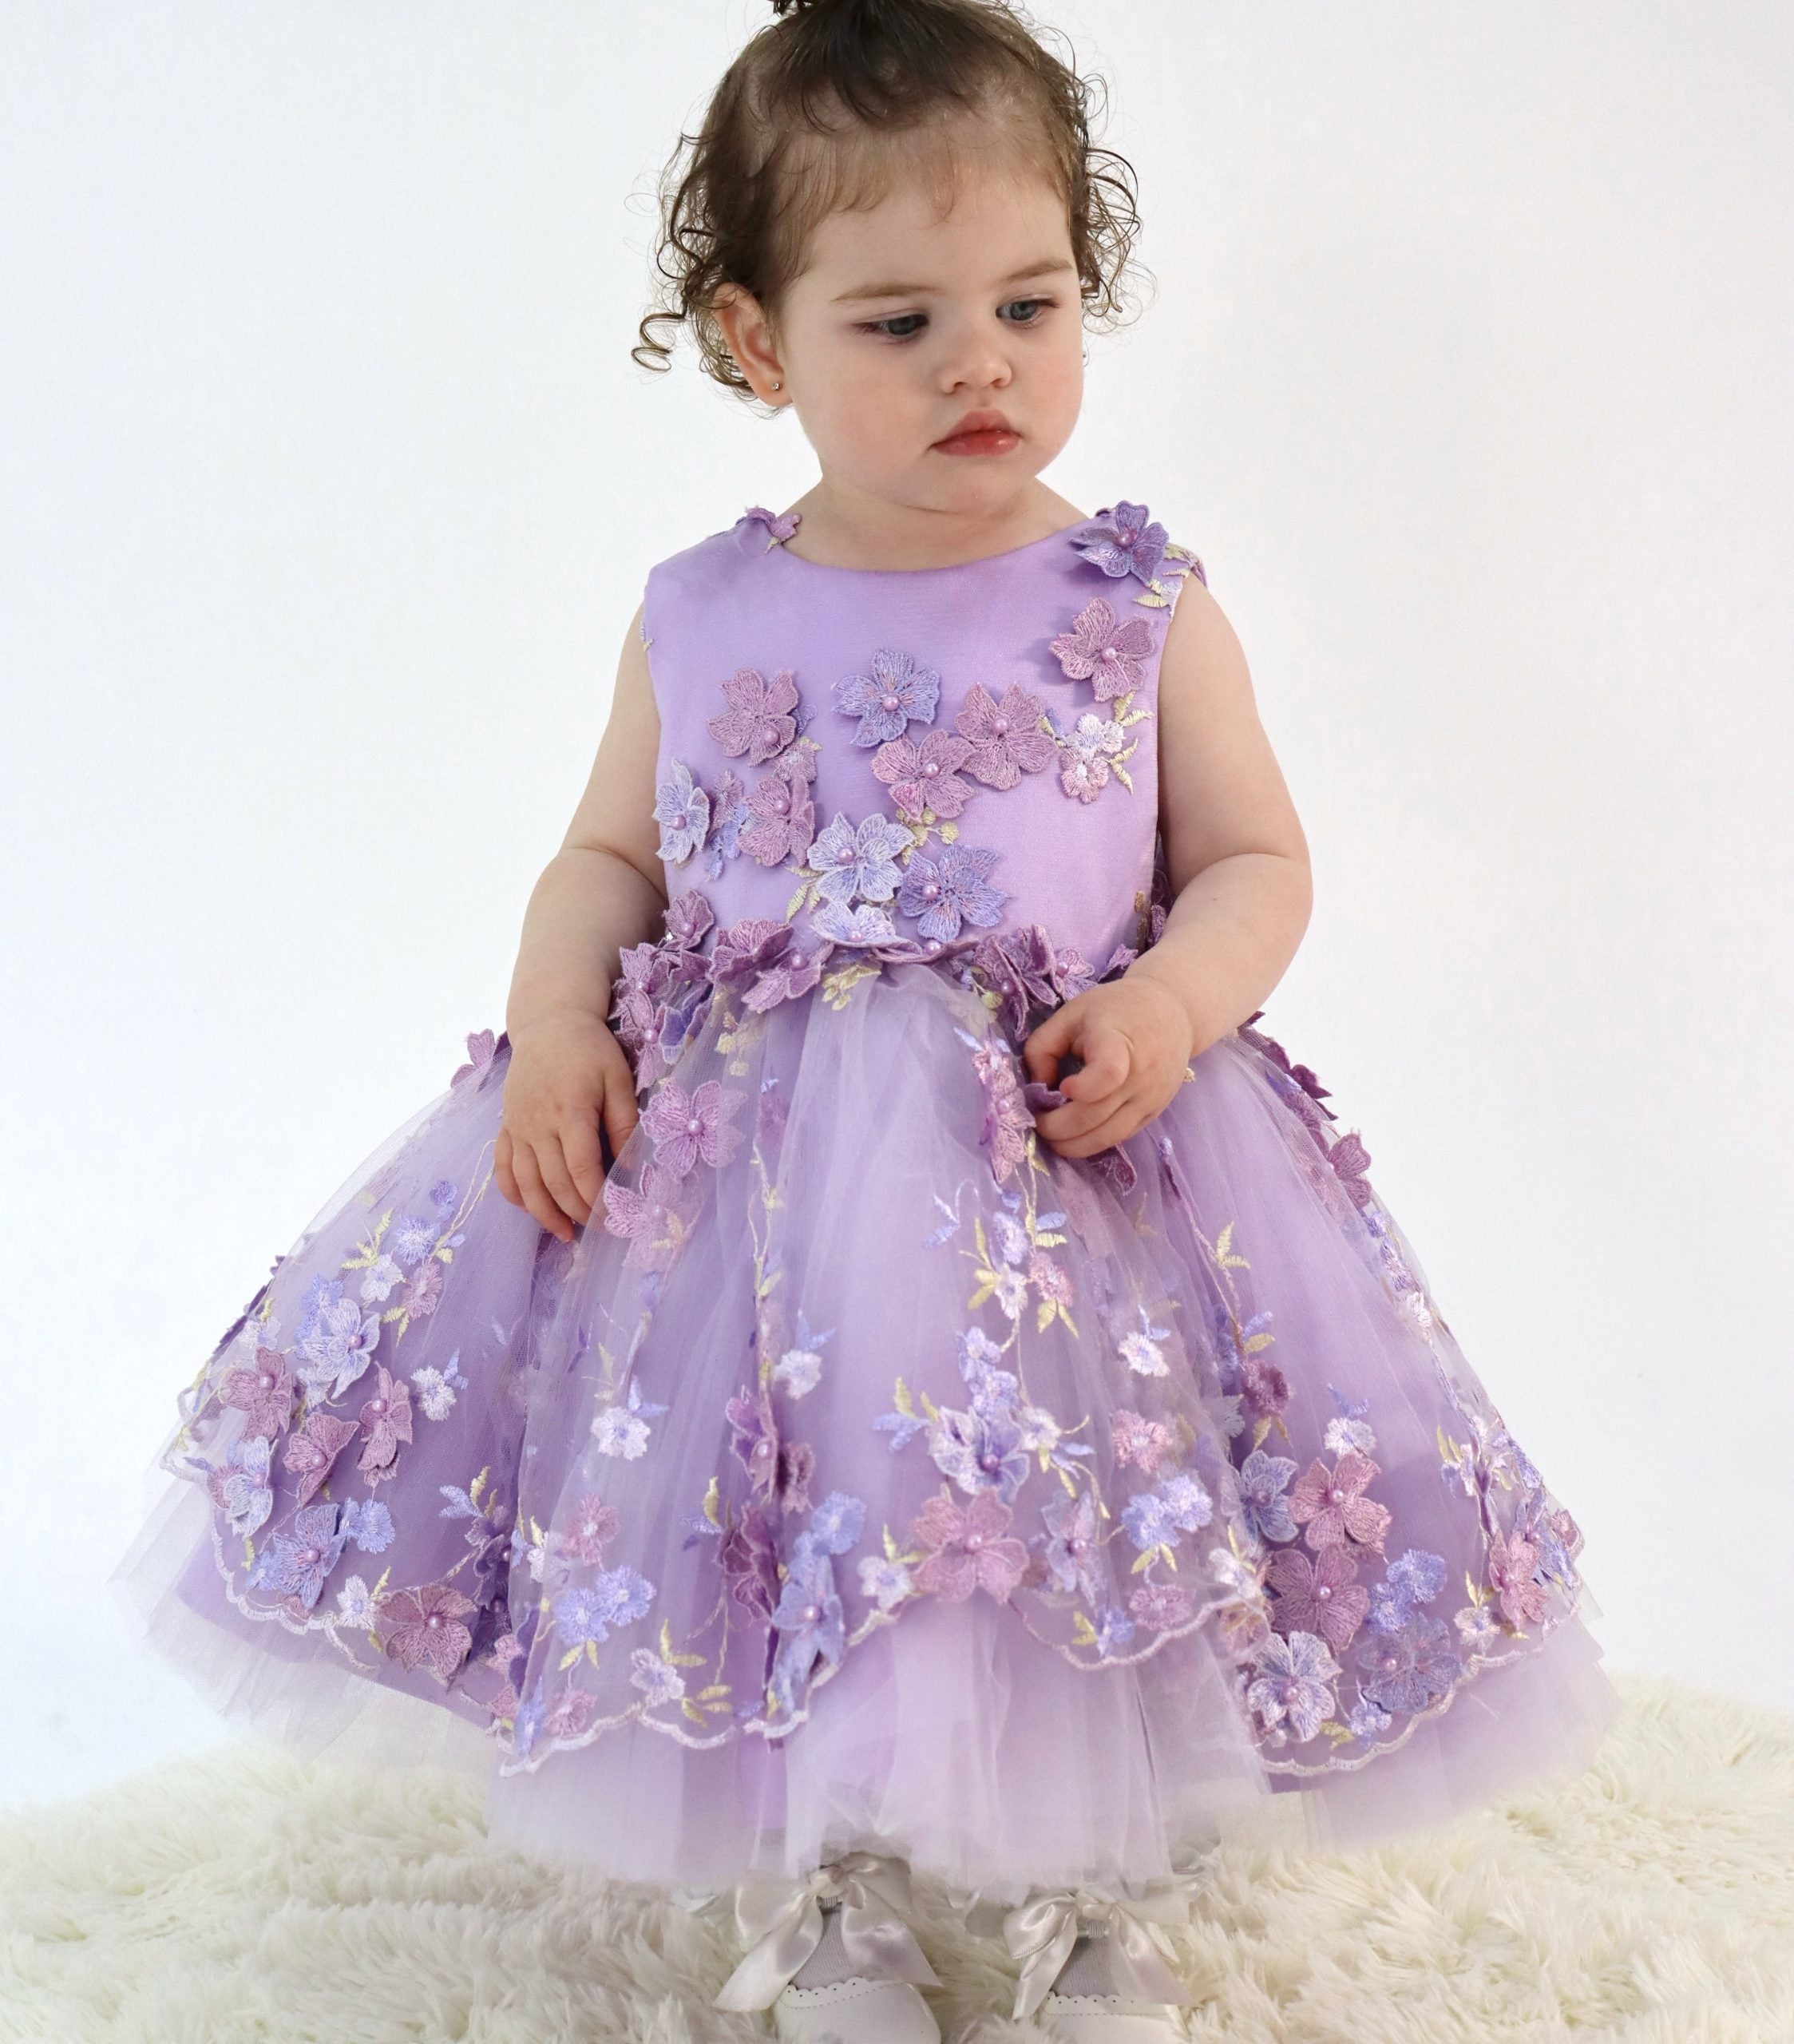 Amarah Purple Dress - First Birthday Dress